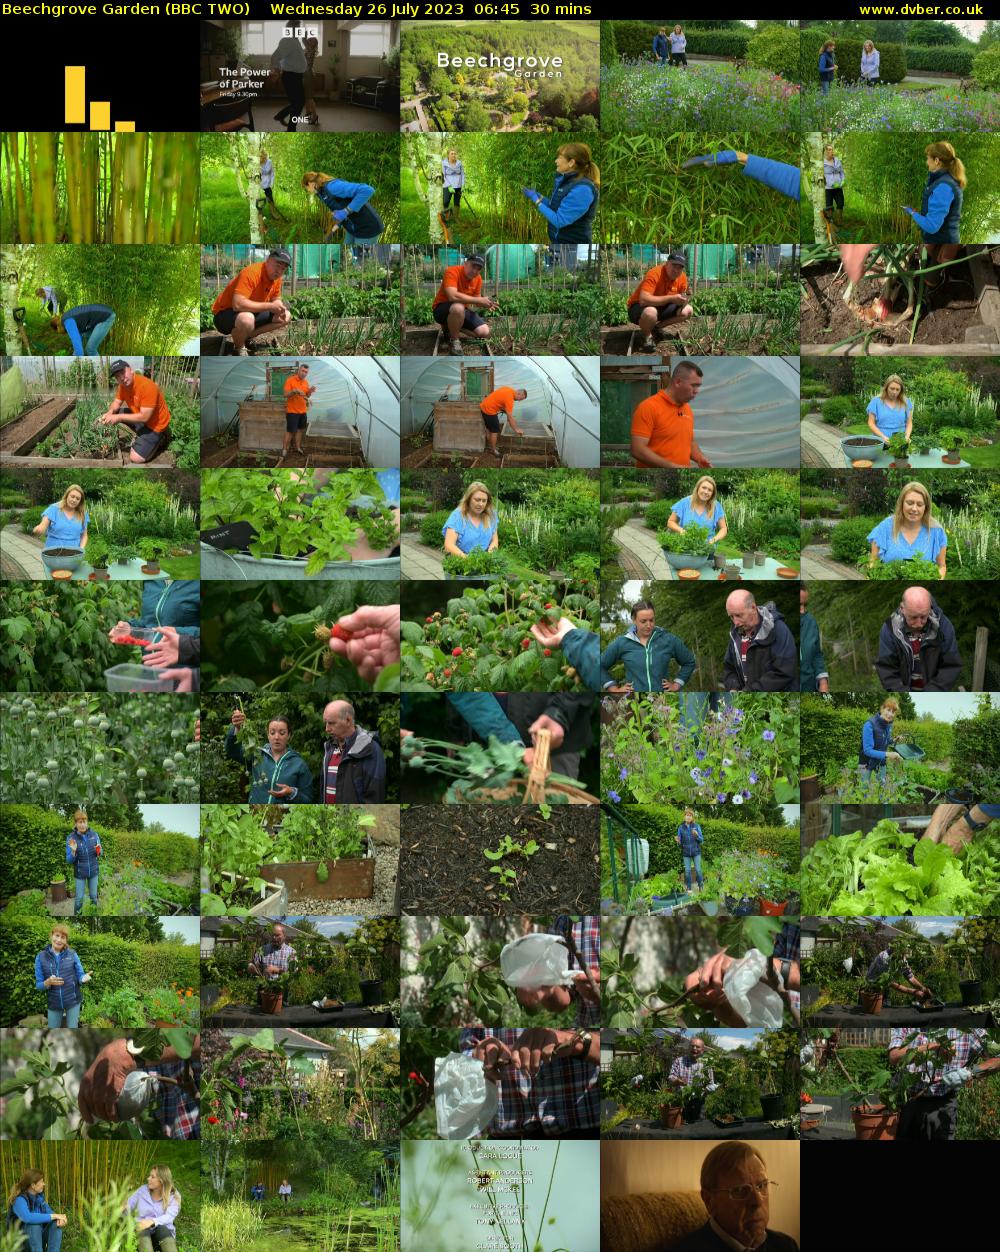 Beechgrove Garden (BBC TWO) Wednesday 26 July 2023 06:45 - 07:15